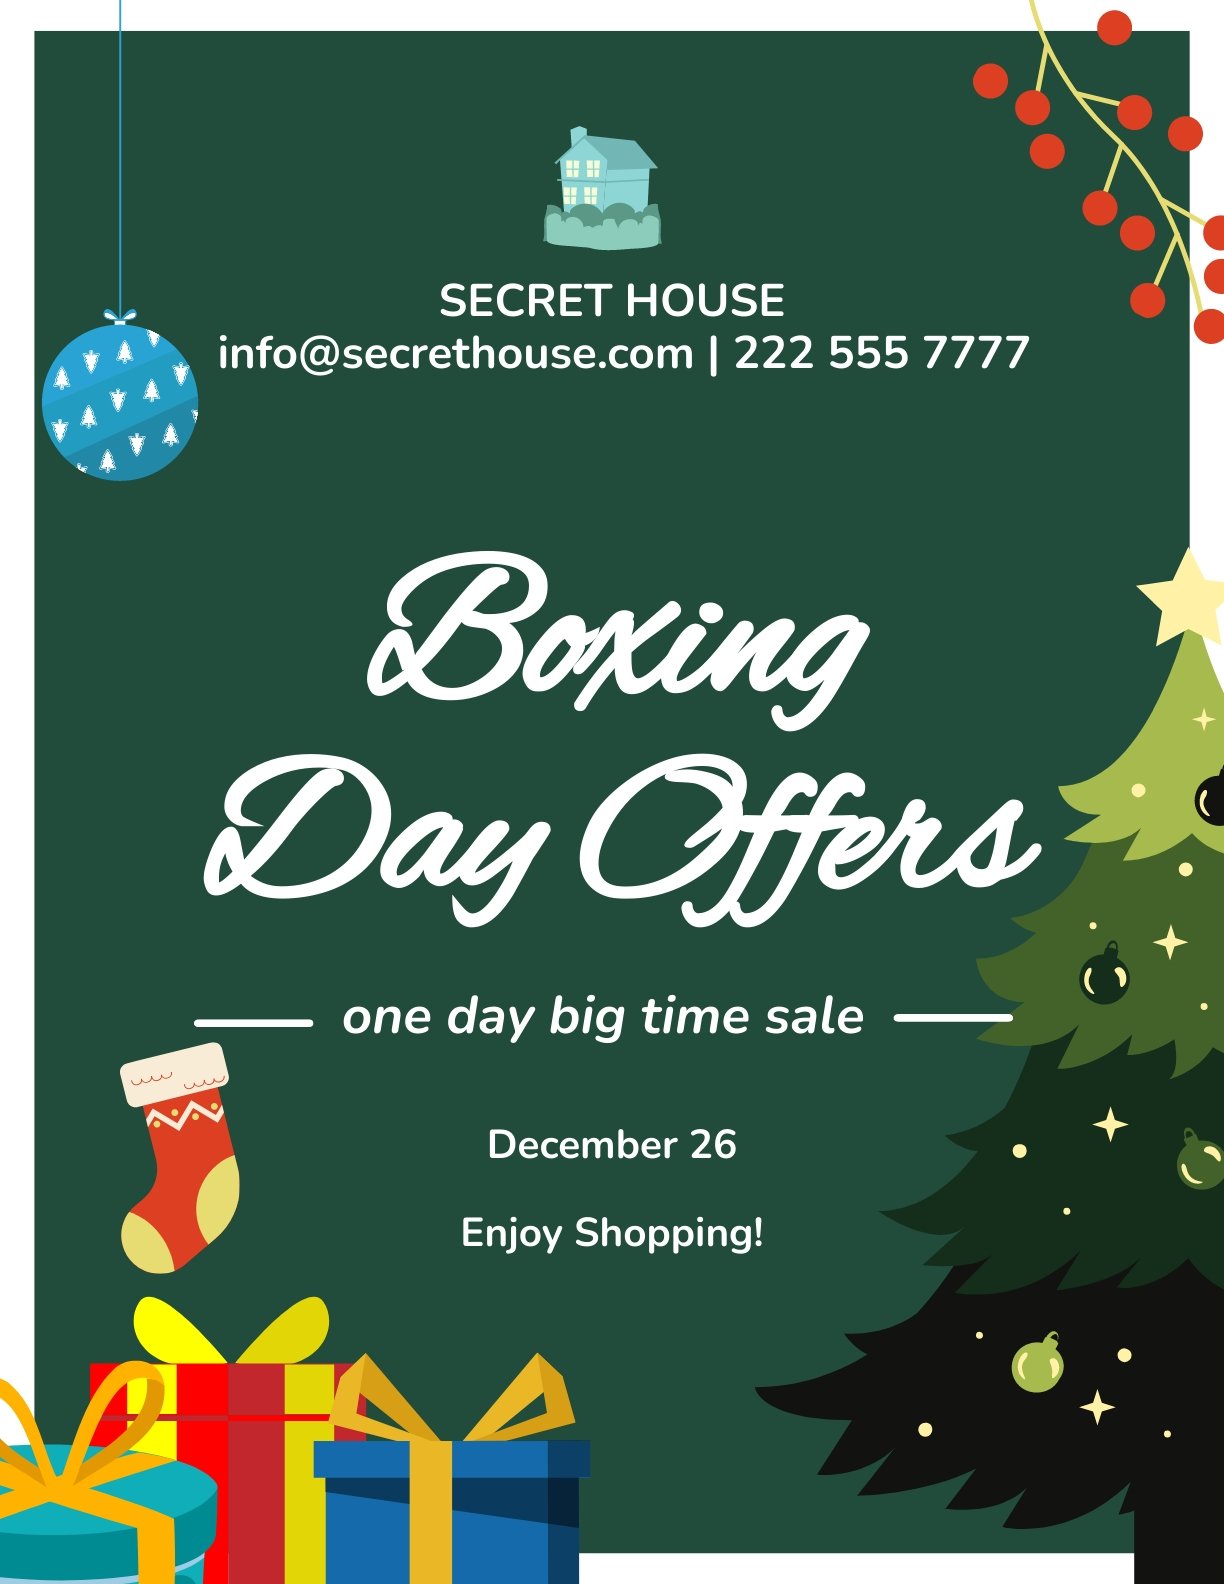 Sale Boxing Day Flyer in Word, Google Docs, Illustrator, PSD, EPS, SVG, JPG, PNG